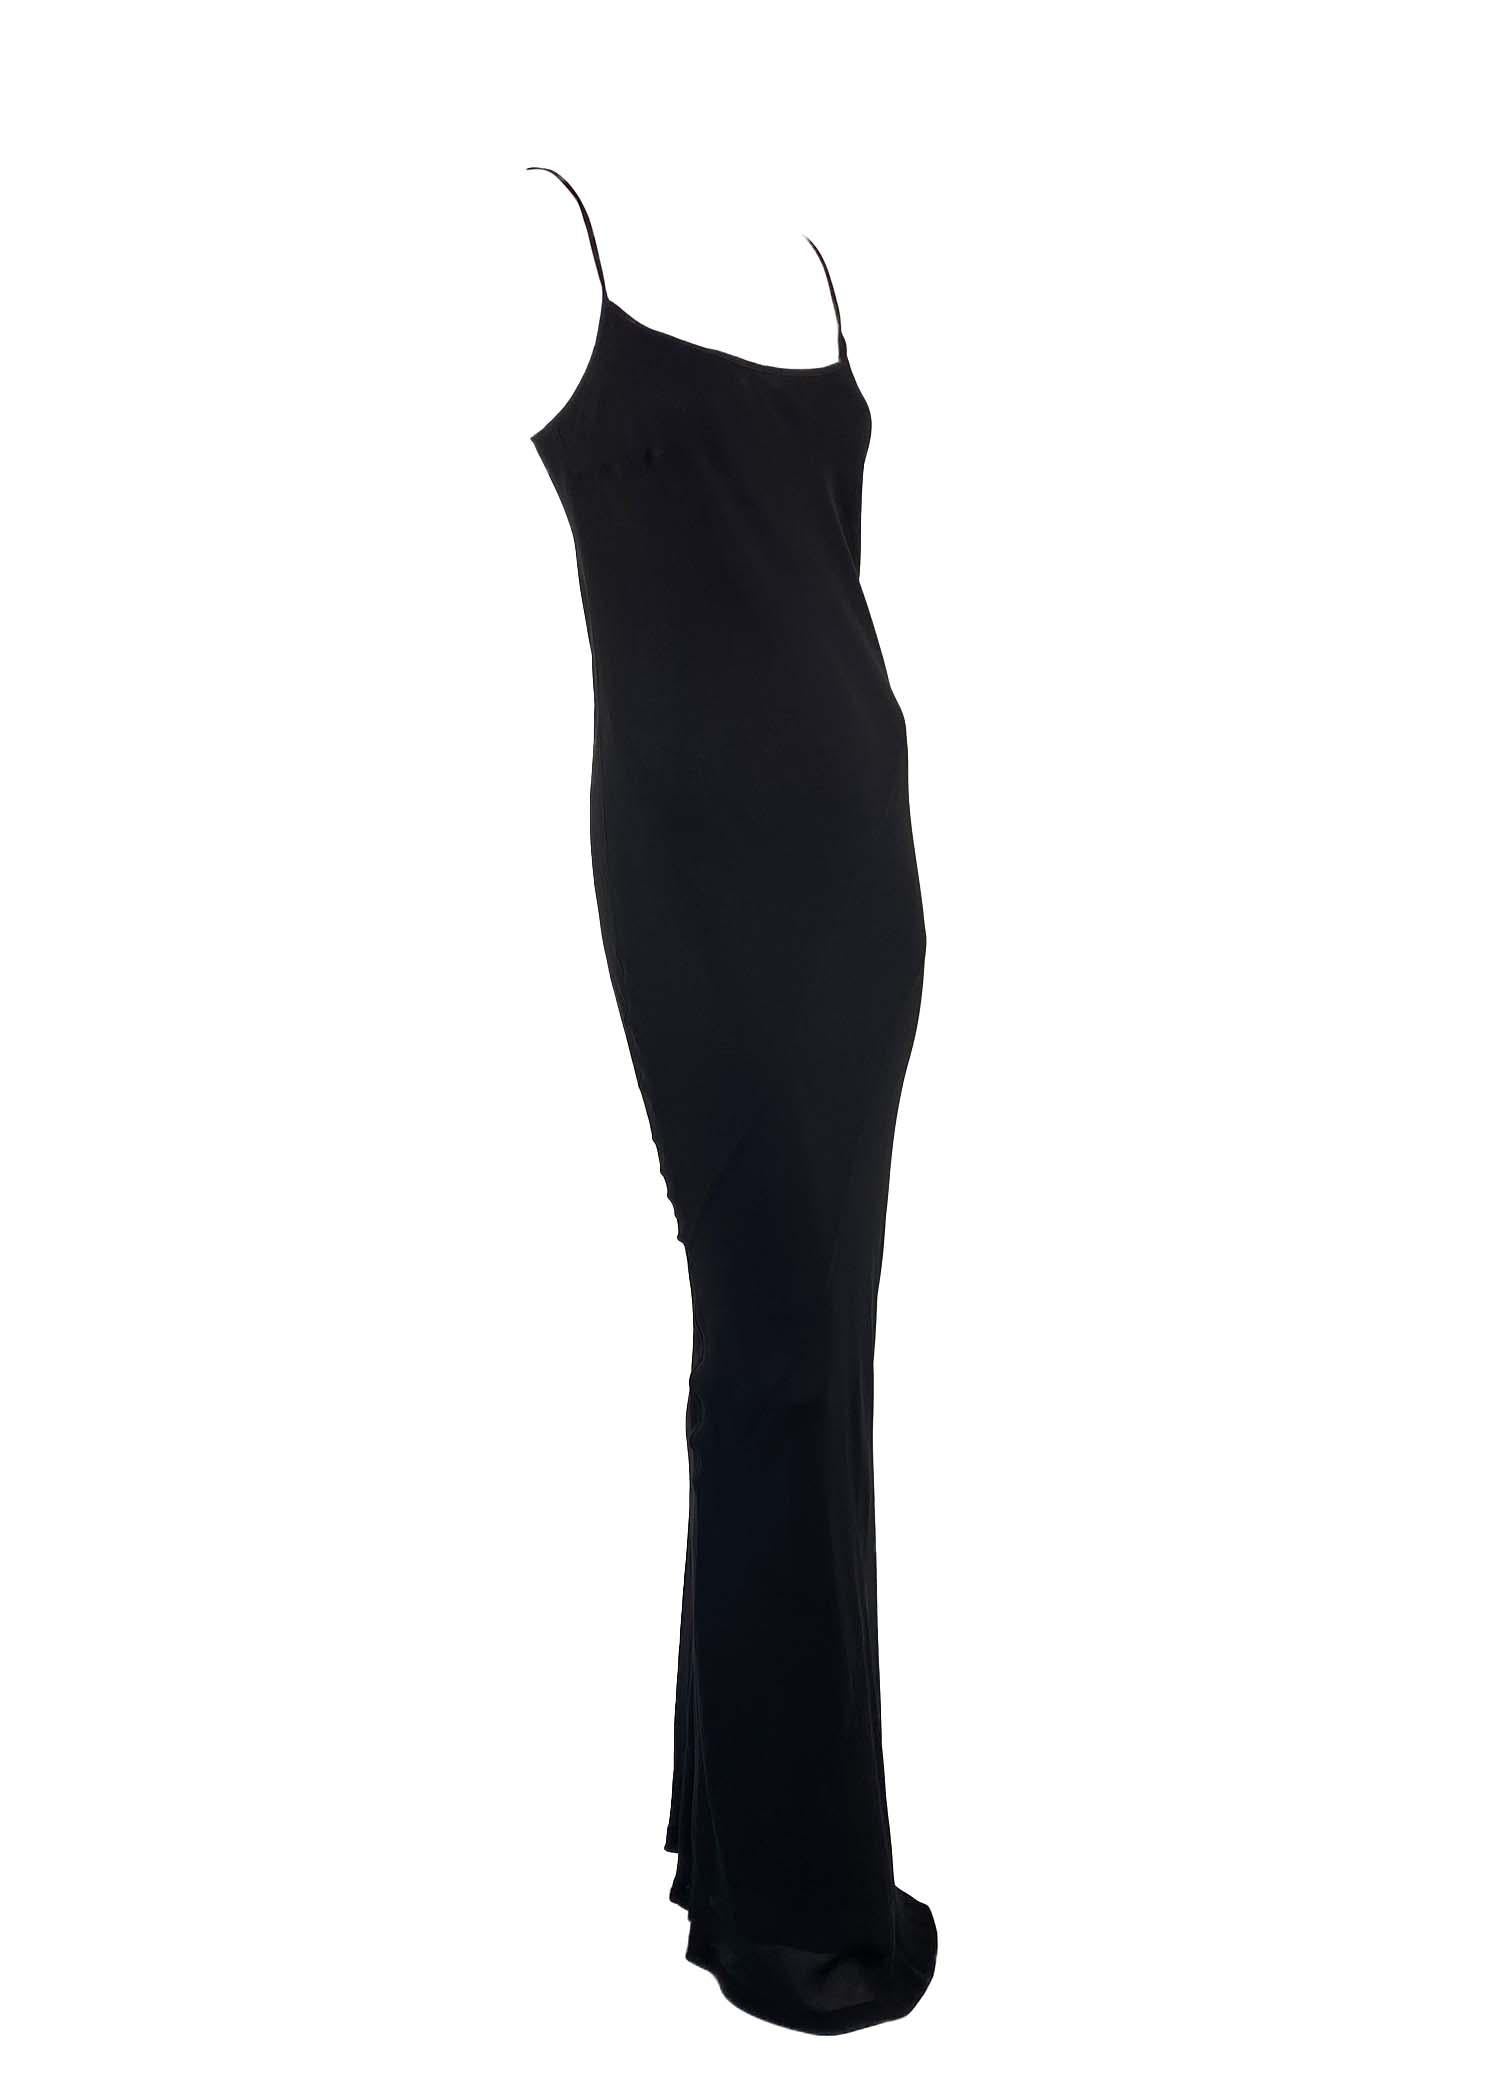 S/S 1997 Gucci by Tom Ford Black Diagonal Cut Sheer Silk Column Dress Slip For Sale 4